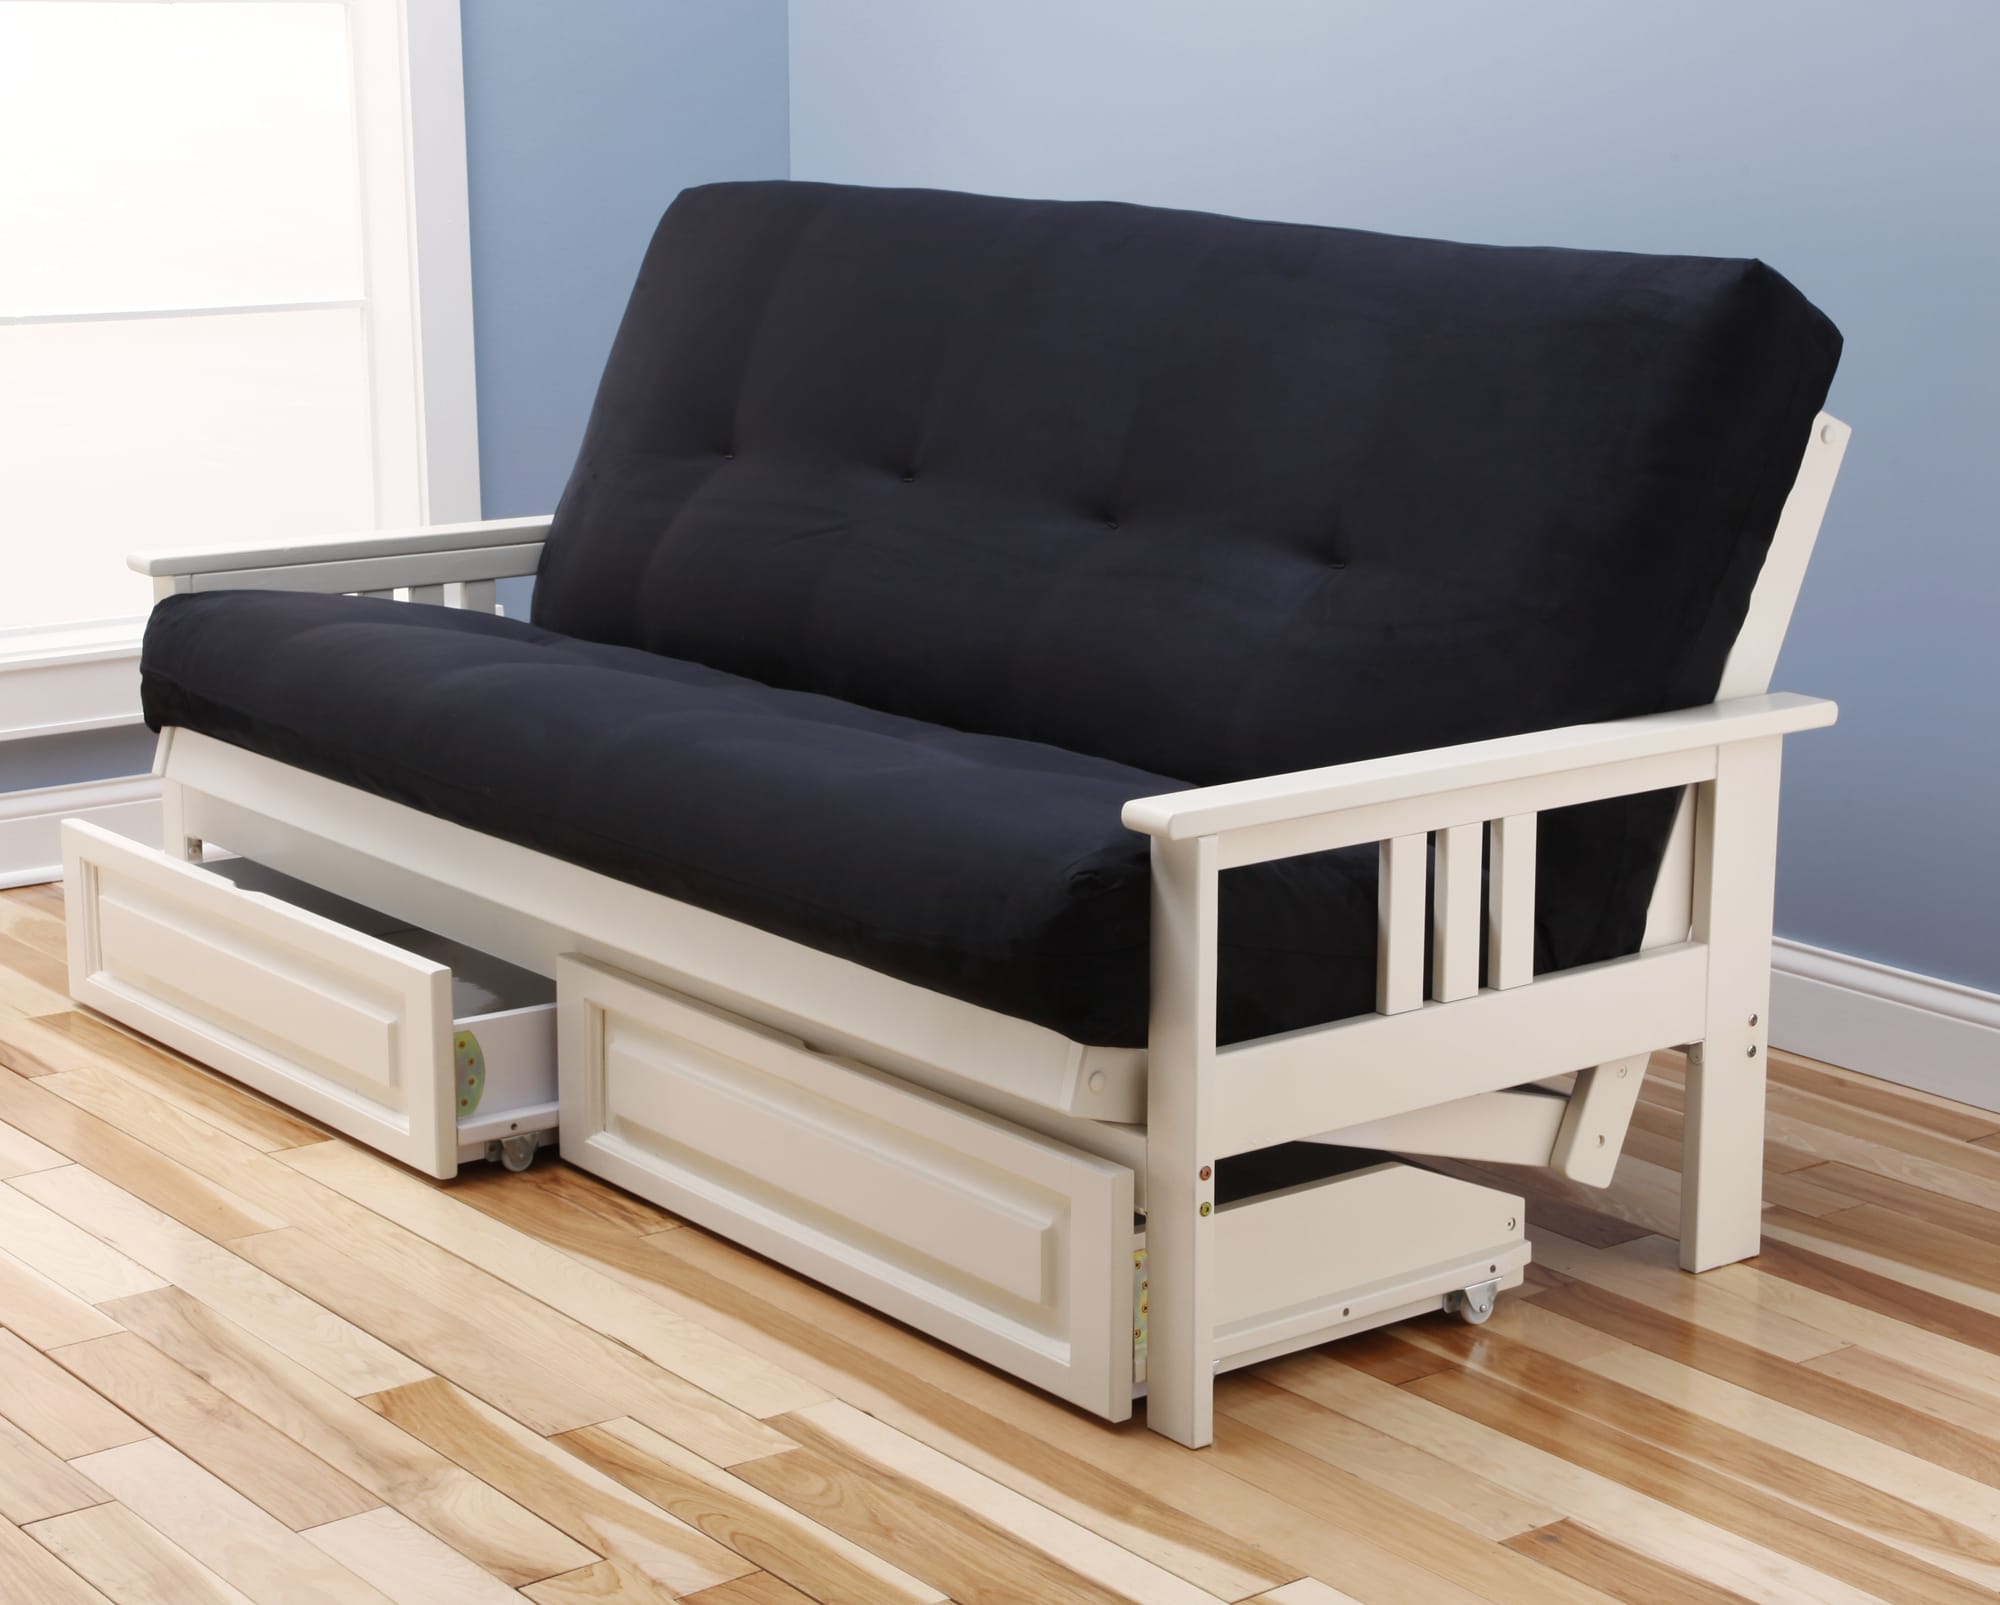 cheap futon mattress canada